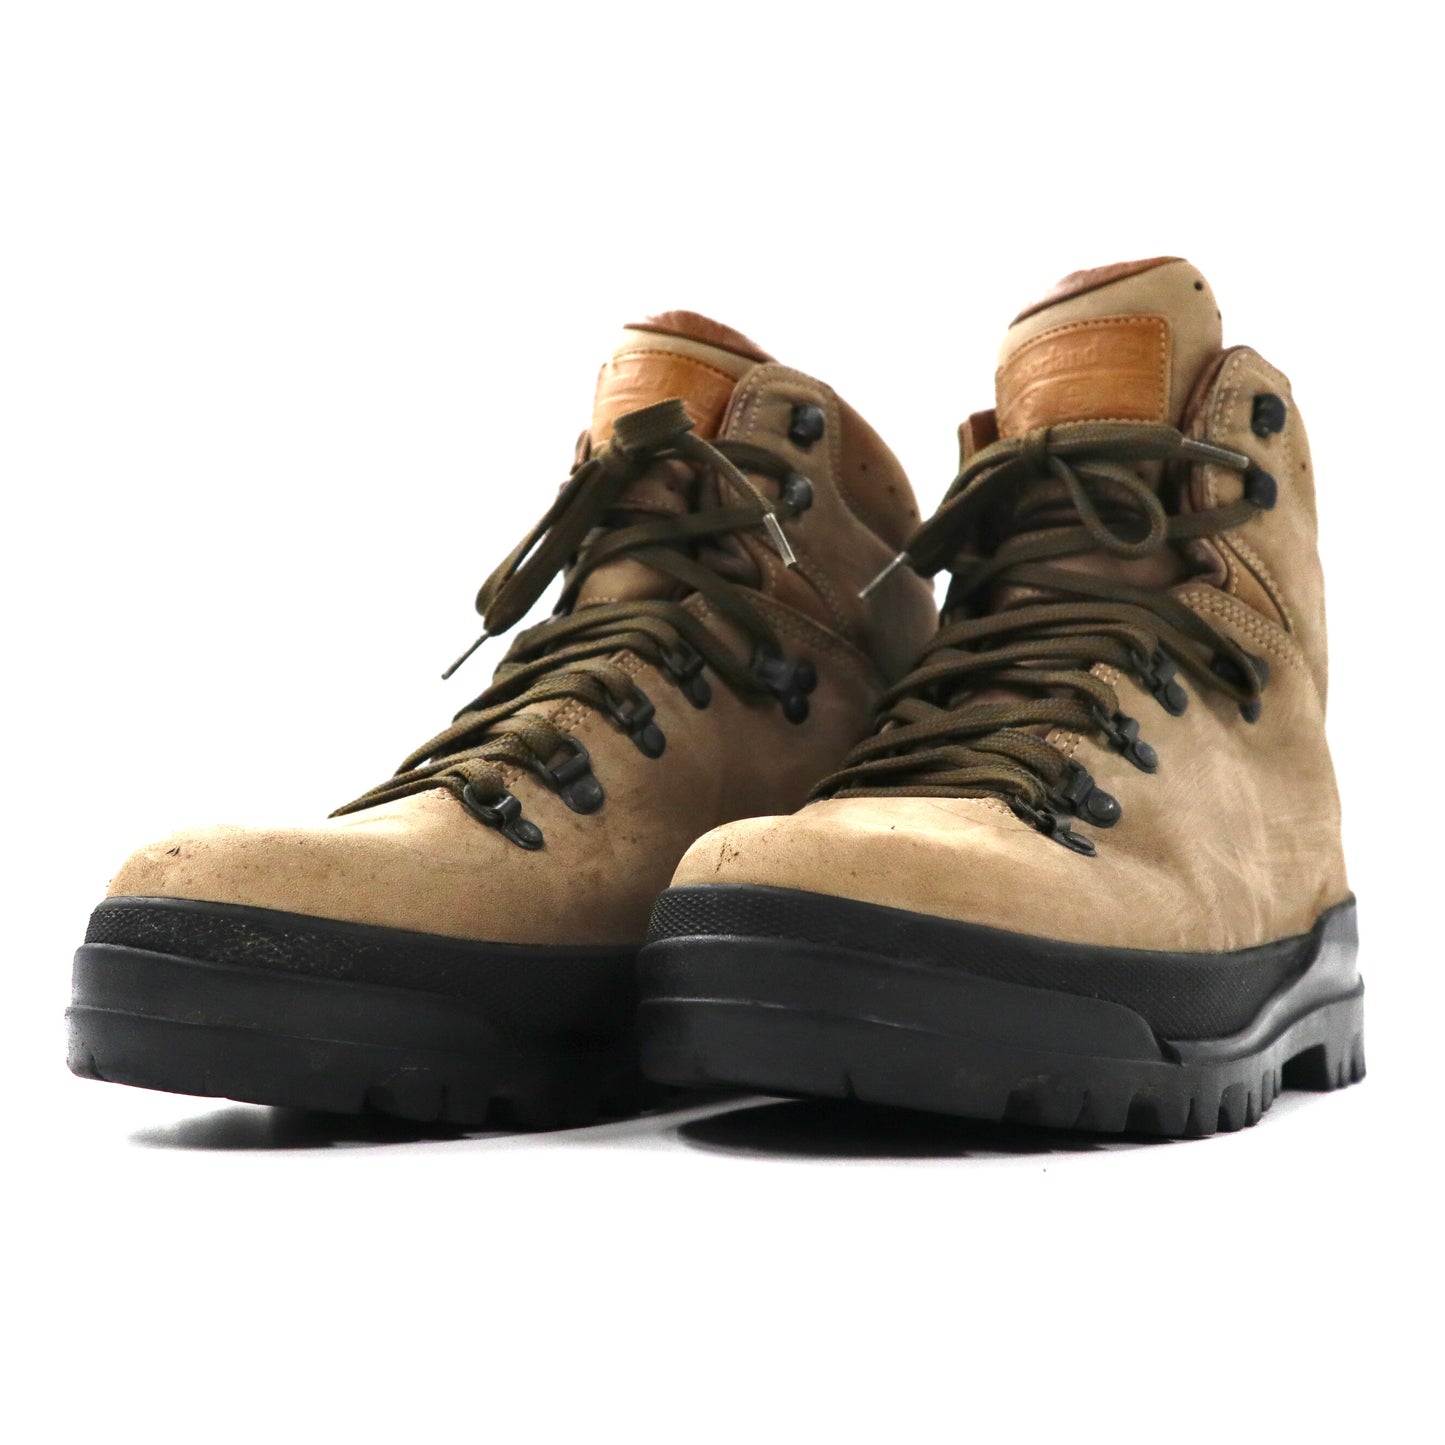 Timberland Trekking Boots US8.5 Beige Leather VIBRAM Sole GORE-TEX